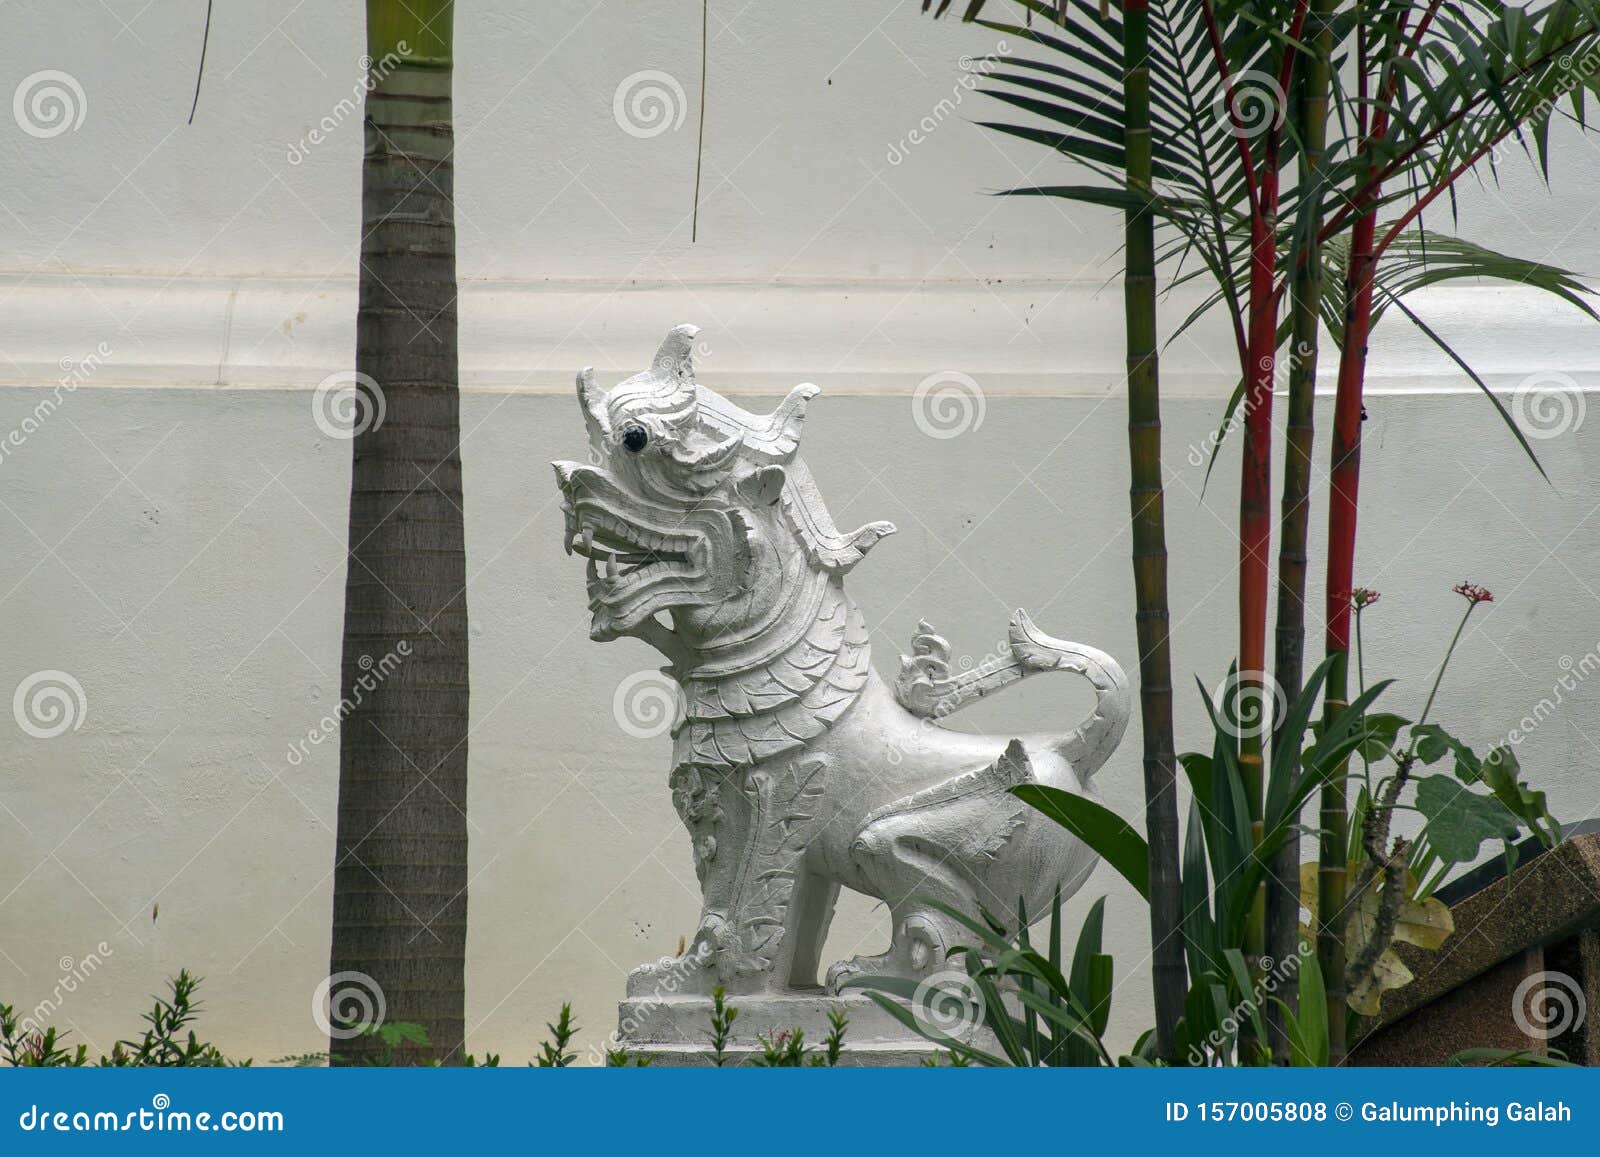 guardian sculpture in gardens at wat umong mahathera chan, chiang mai, thailand